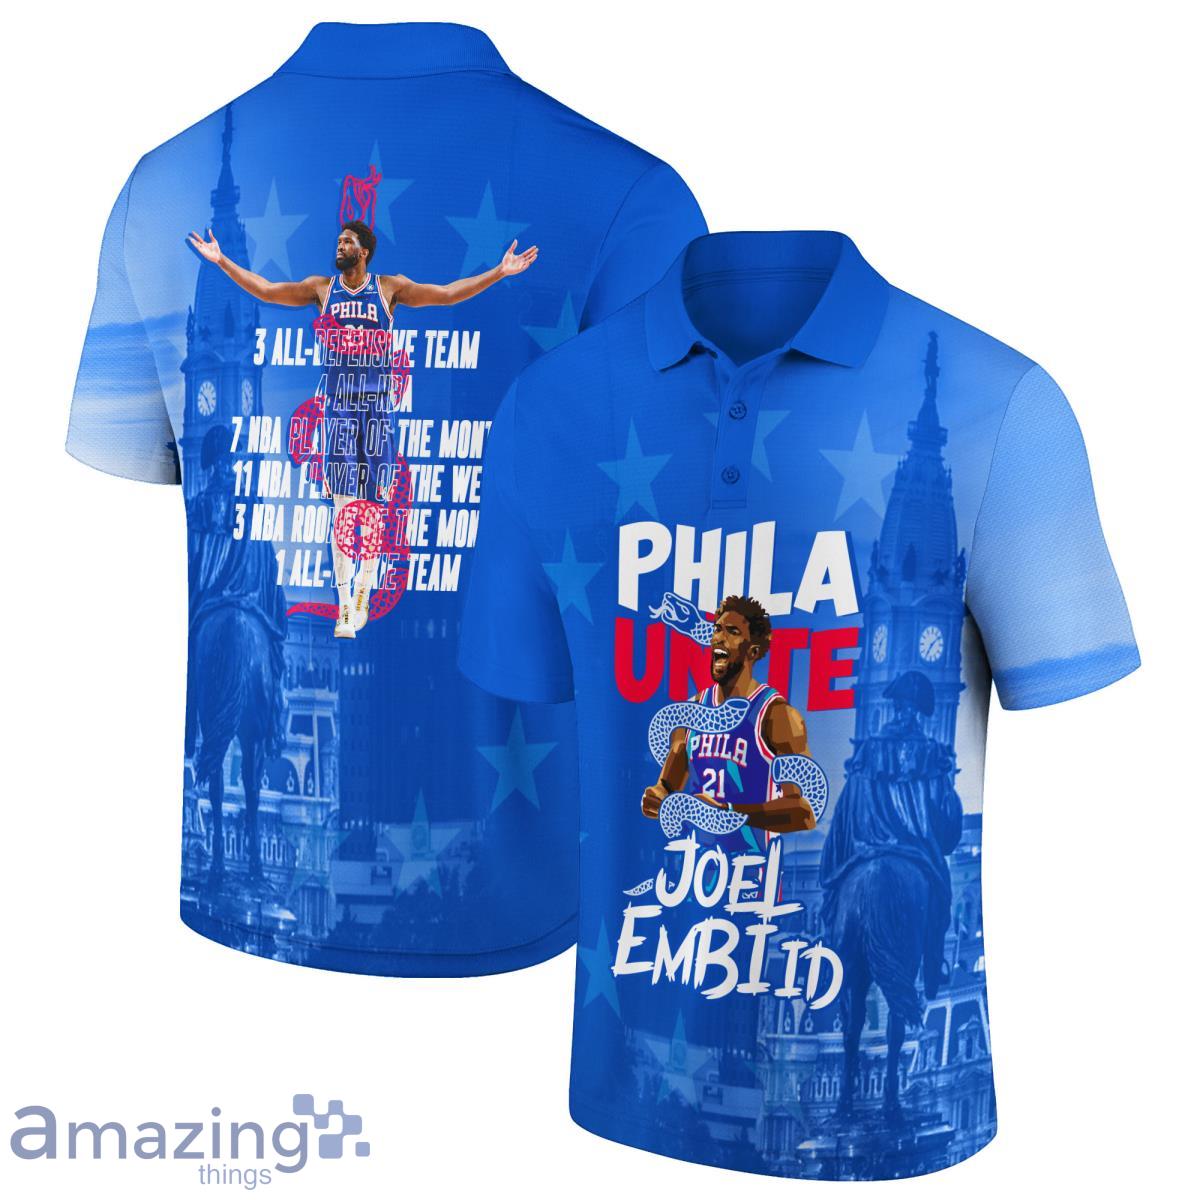 Joel Embiid Stars Player Philadelphia 76ers Print 3D Polo Shirt Product Photo 1